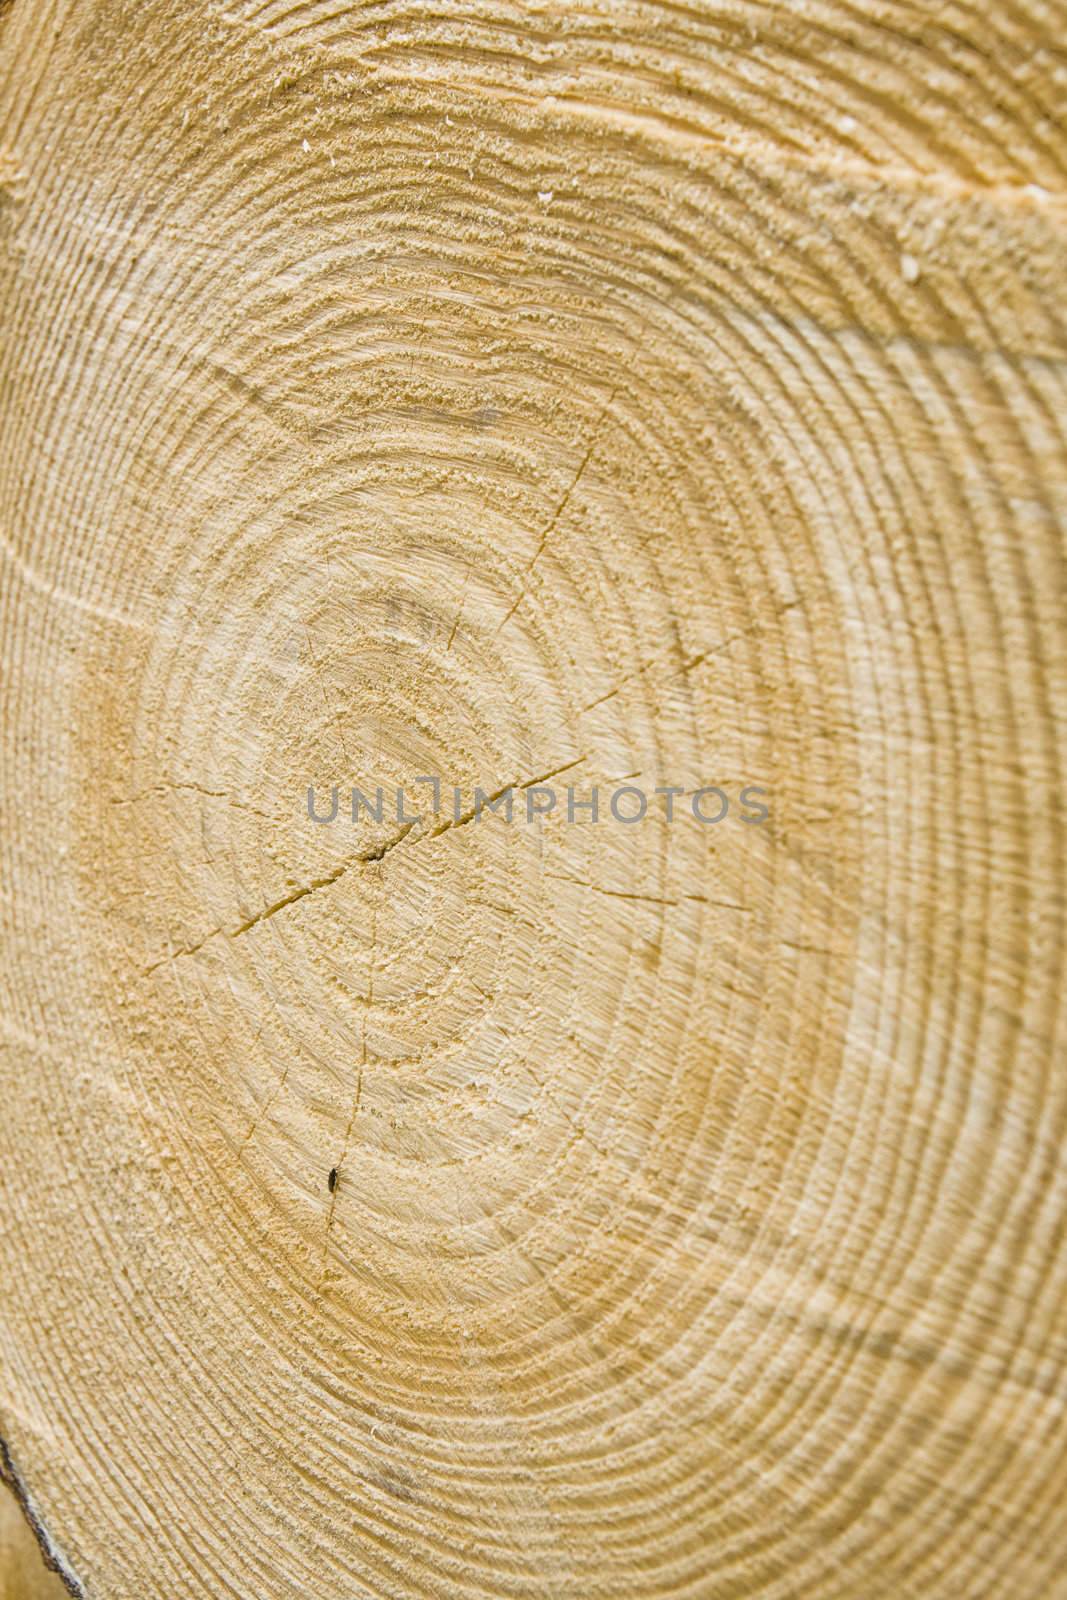 Golden timber tree rings by Nikonas